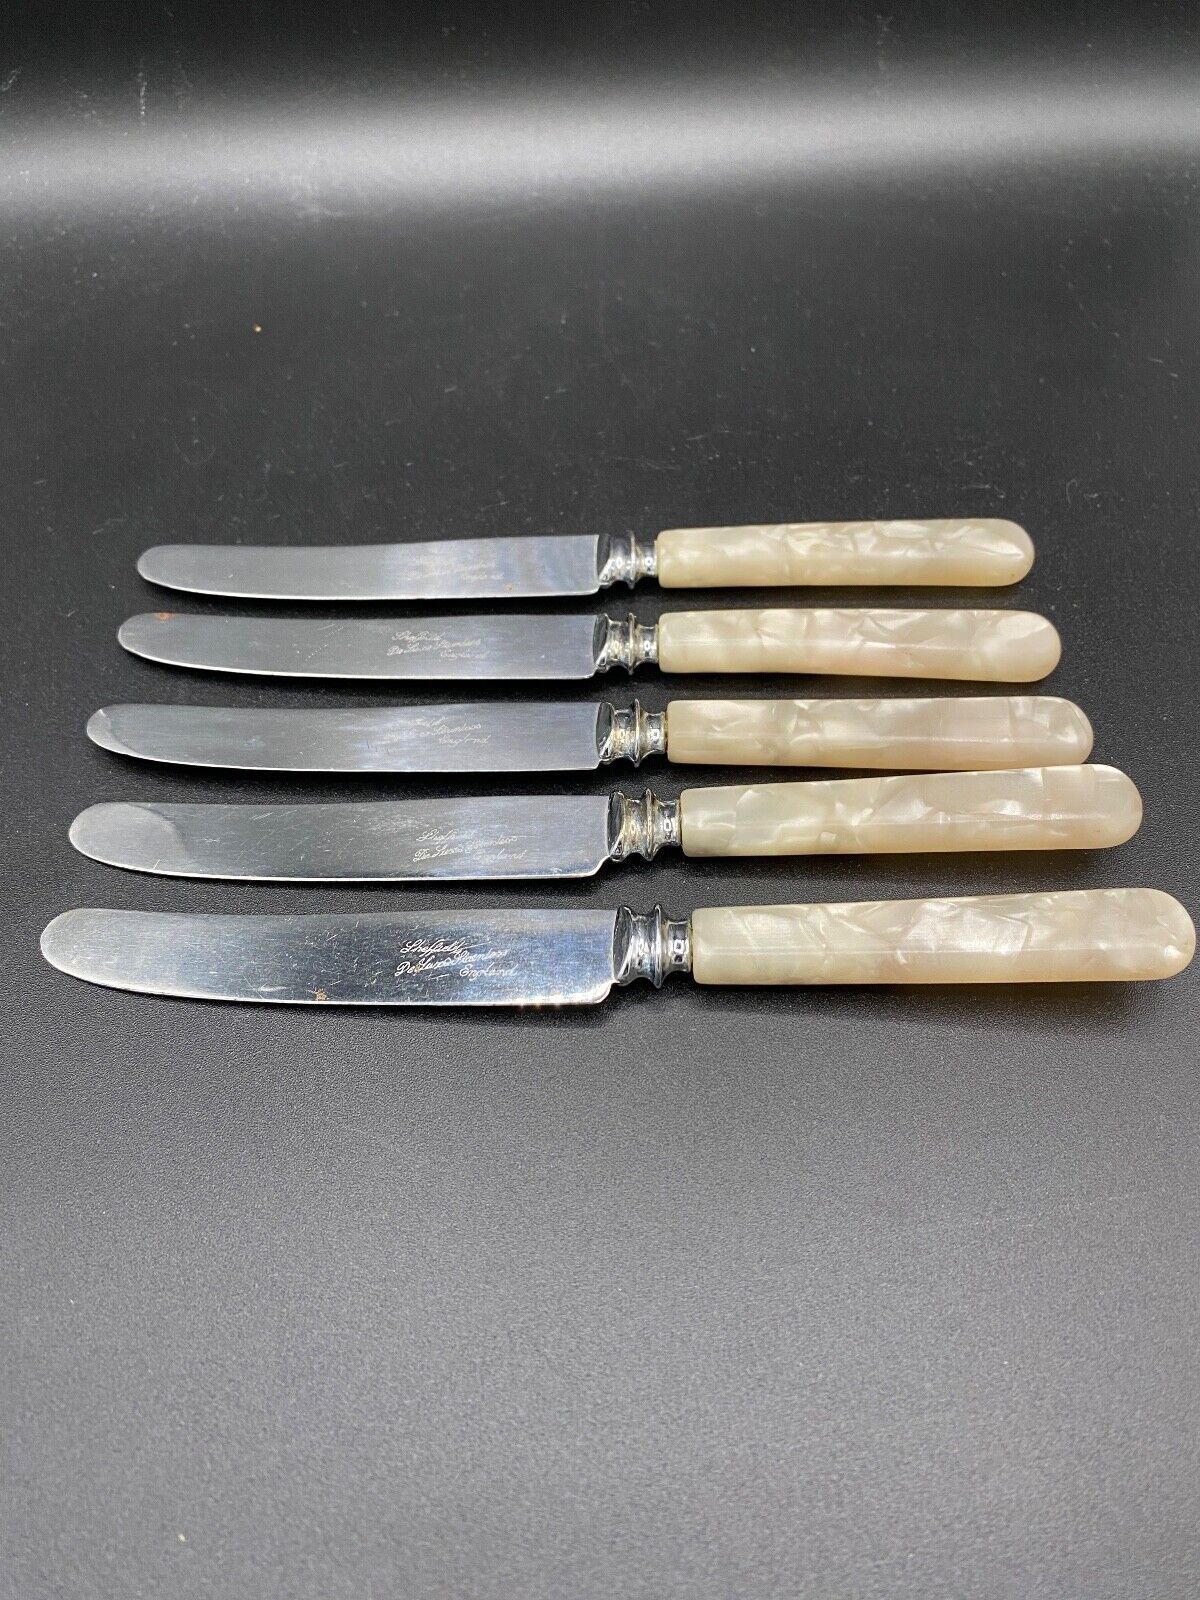 DeLuxe Cheese Knife x 5. Bakelite faux abalone handles, stainless steel VTG UK - $20.50